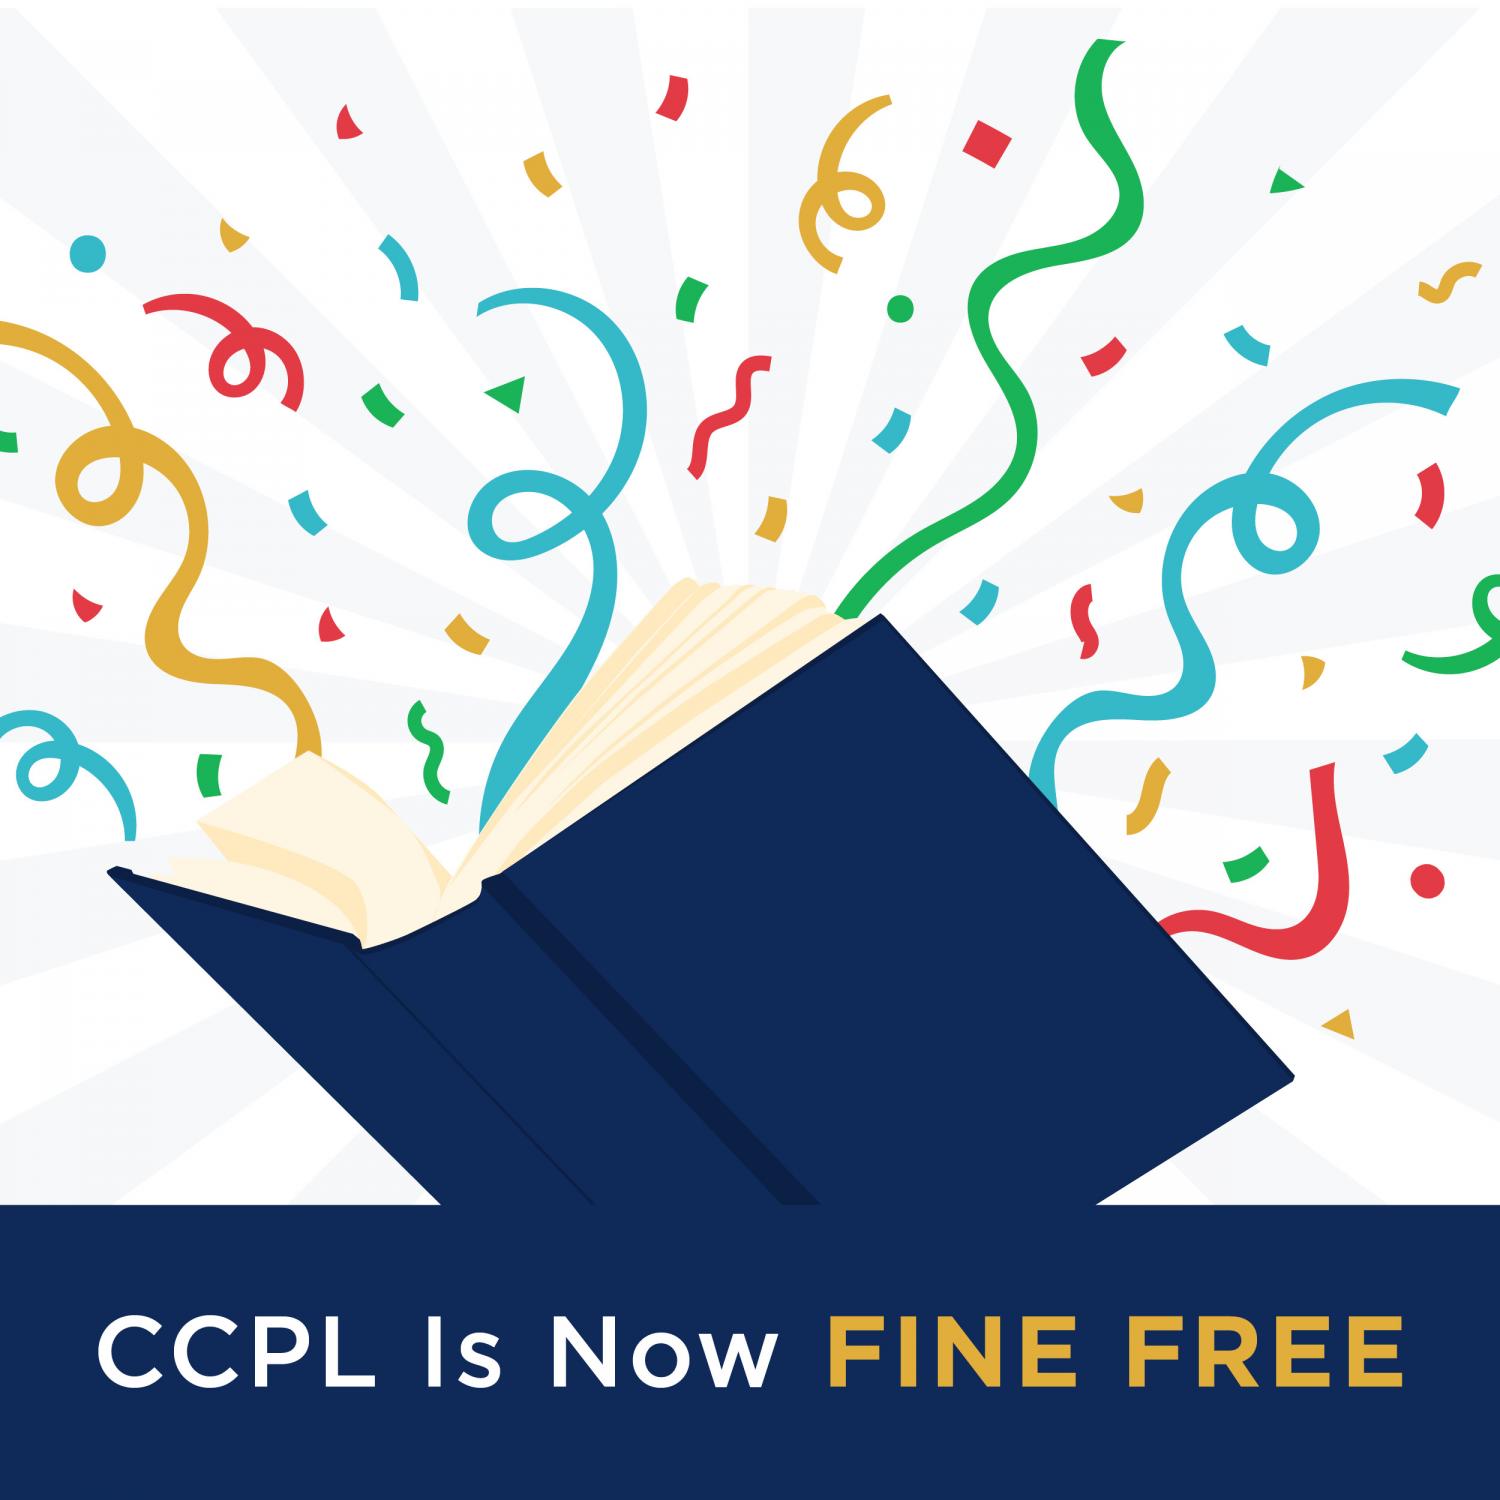 CCPL Is Now Fine Free